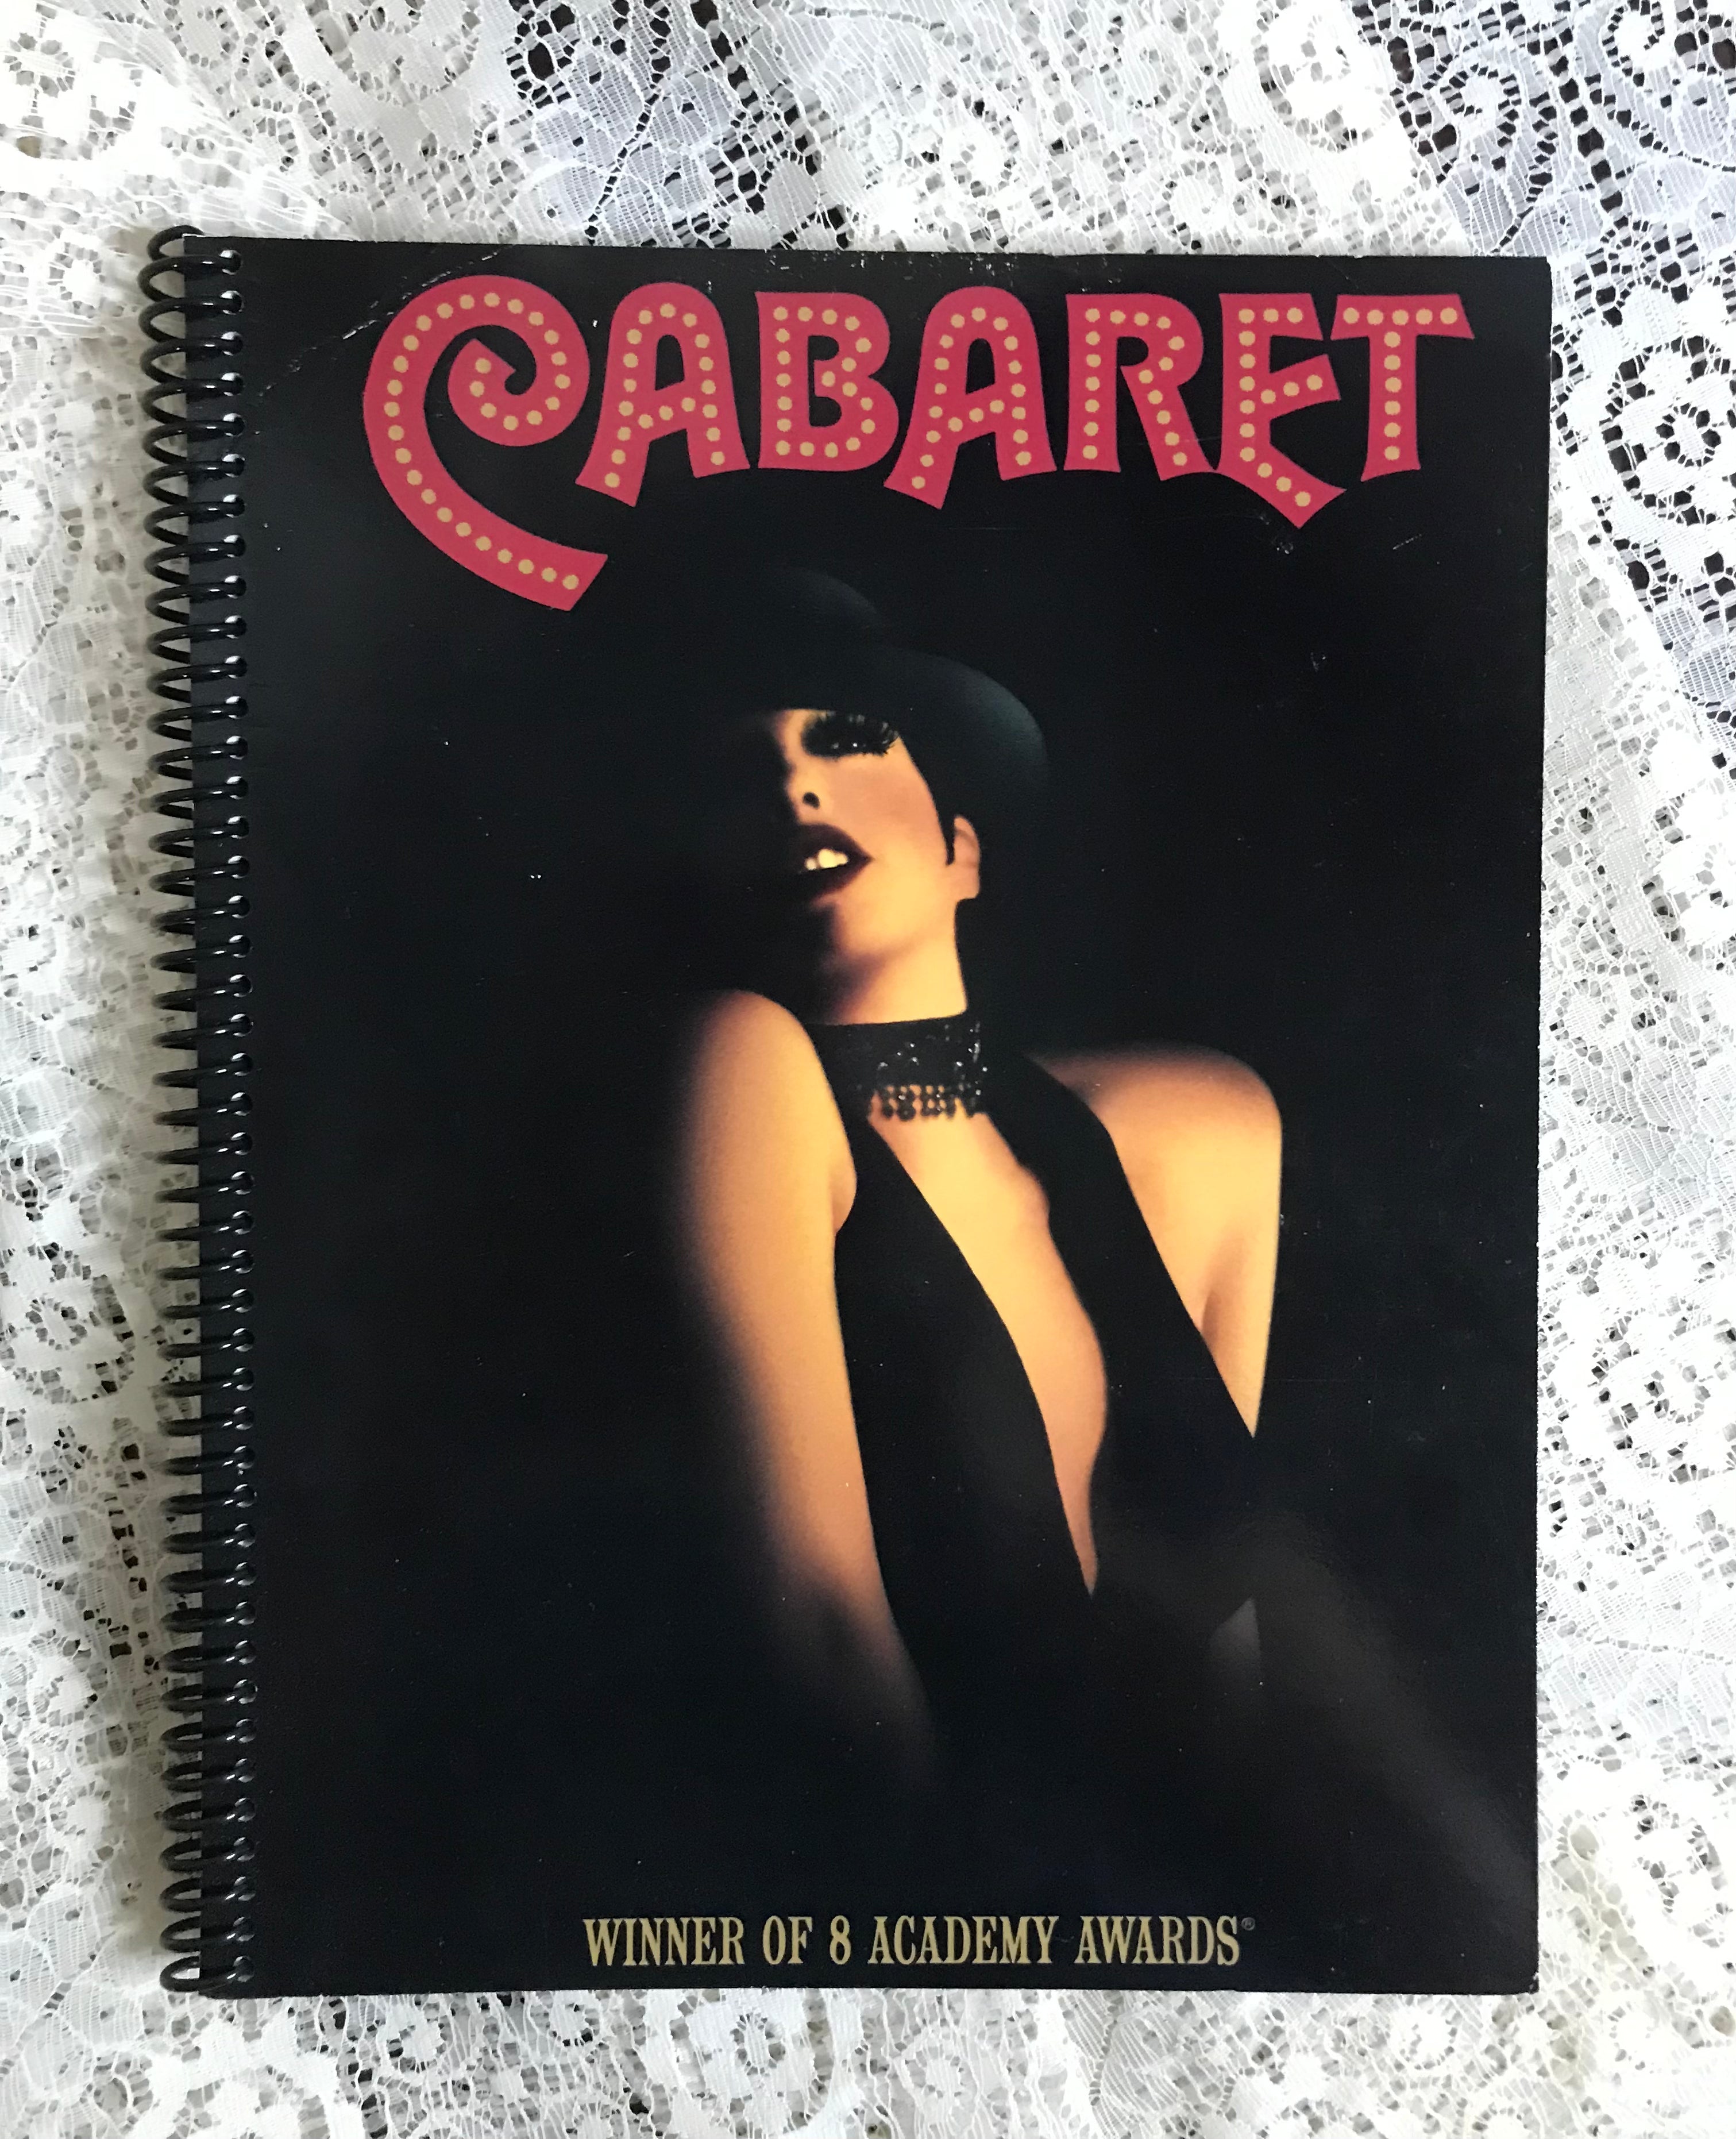 Cabaret the Musical Album Cover Notebook